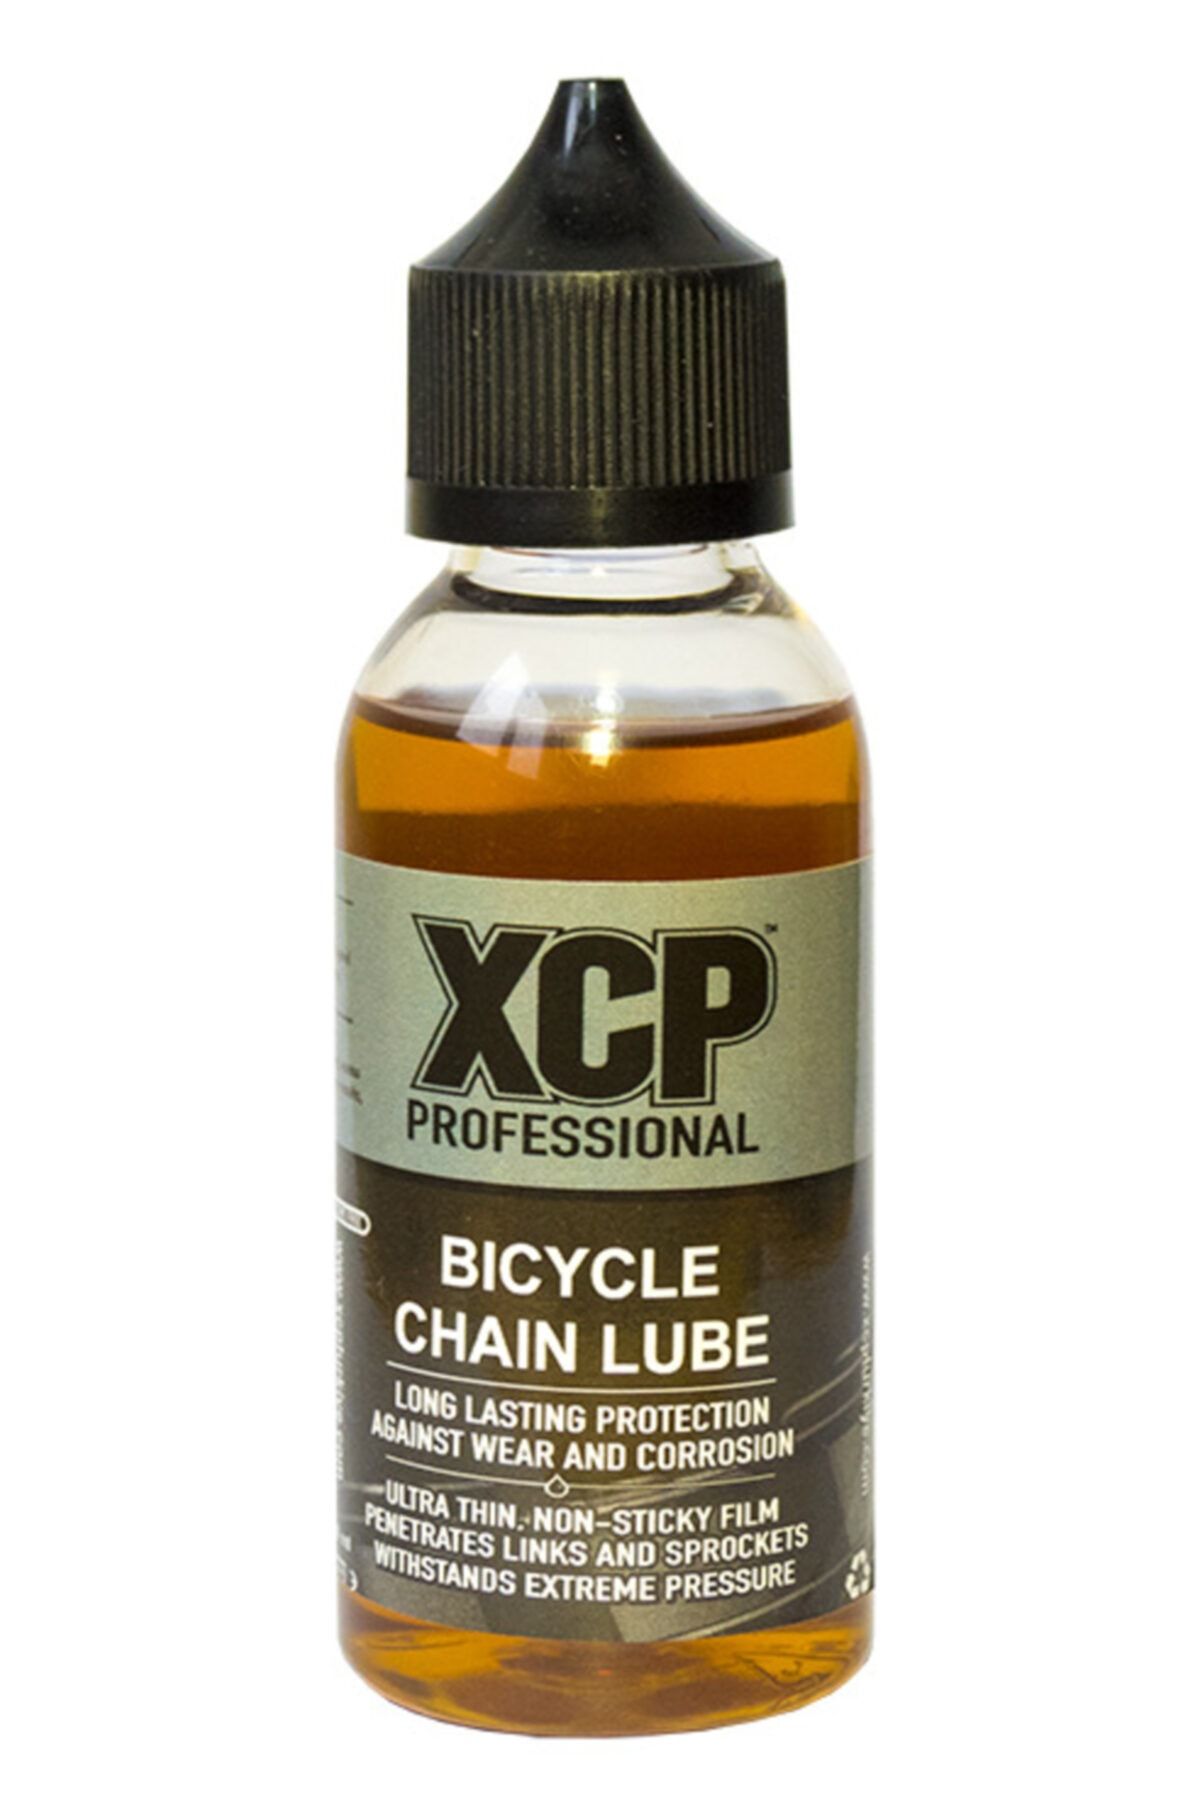 XCP Bisiklet Zincir Yağı (Kararmaz & Yapış Yapış Olmaz) 10ml Yağ + 100ml Extreme Temizlik Sıvısı